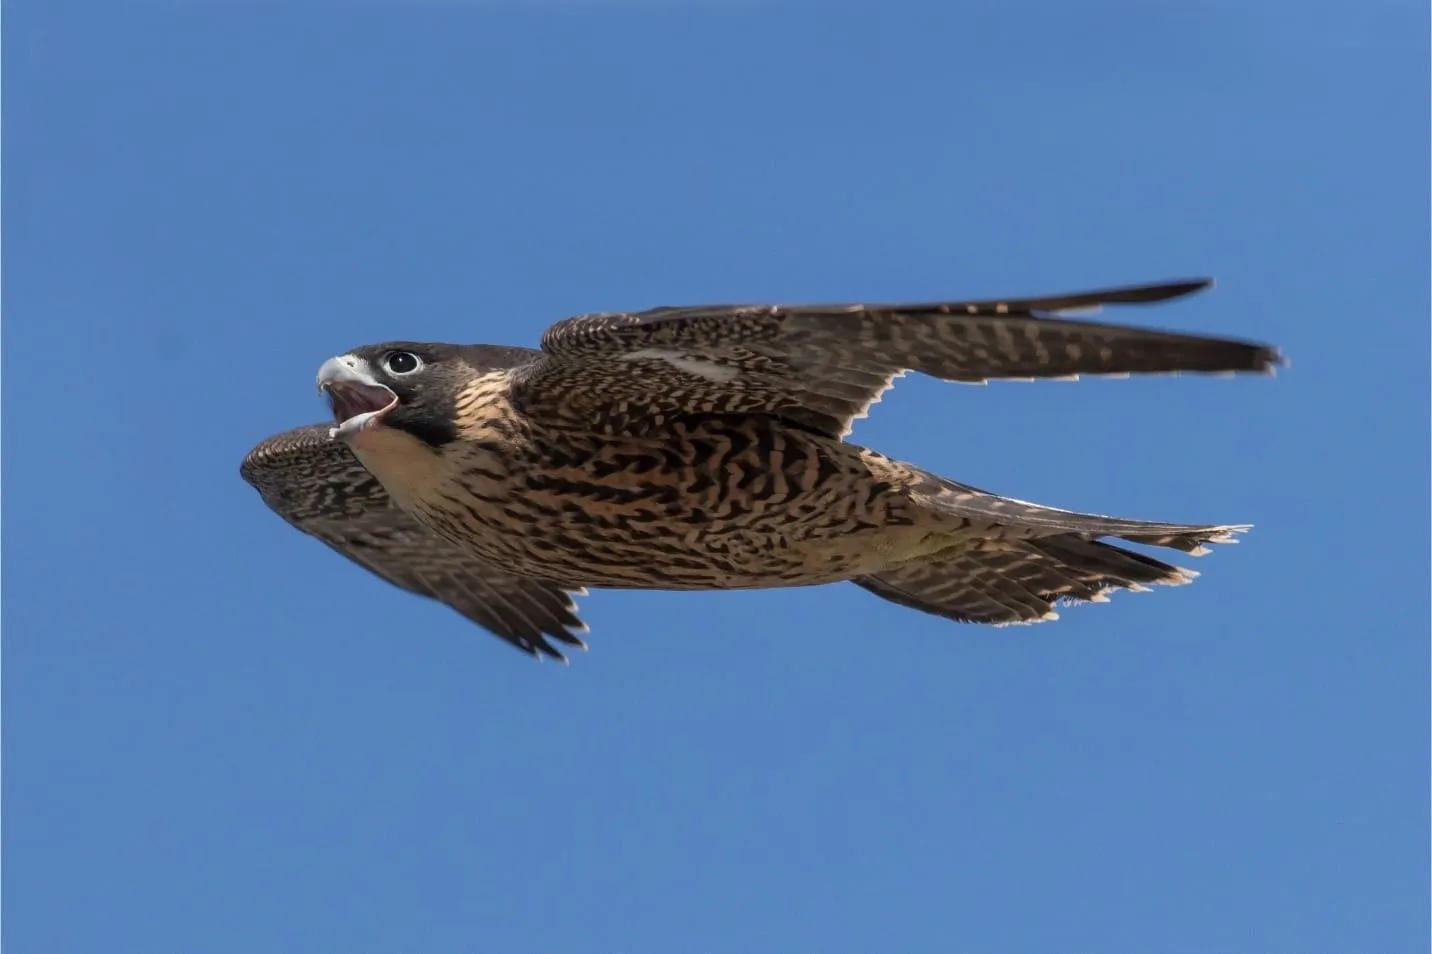 A Peregrine falcon flying